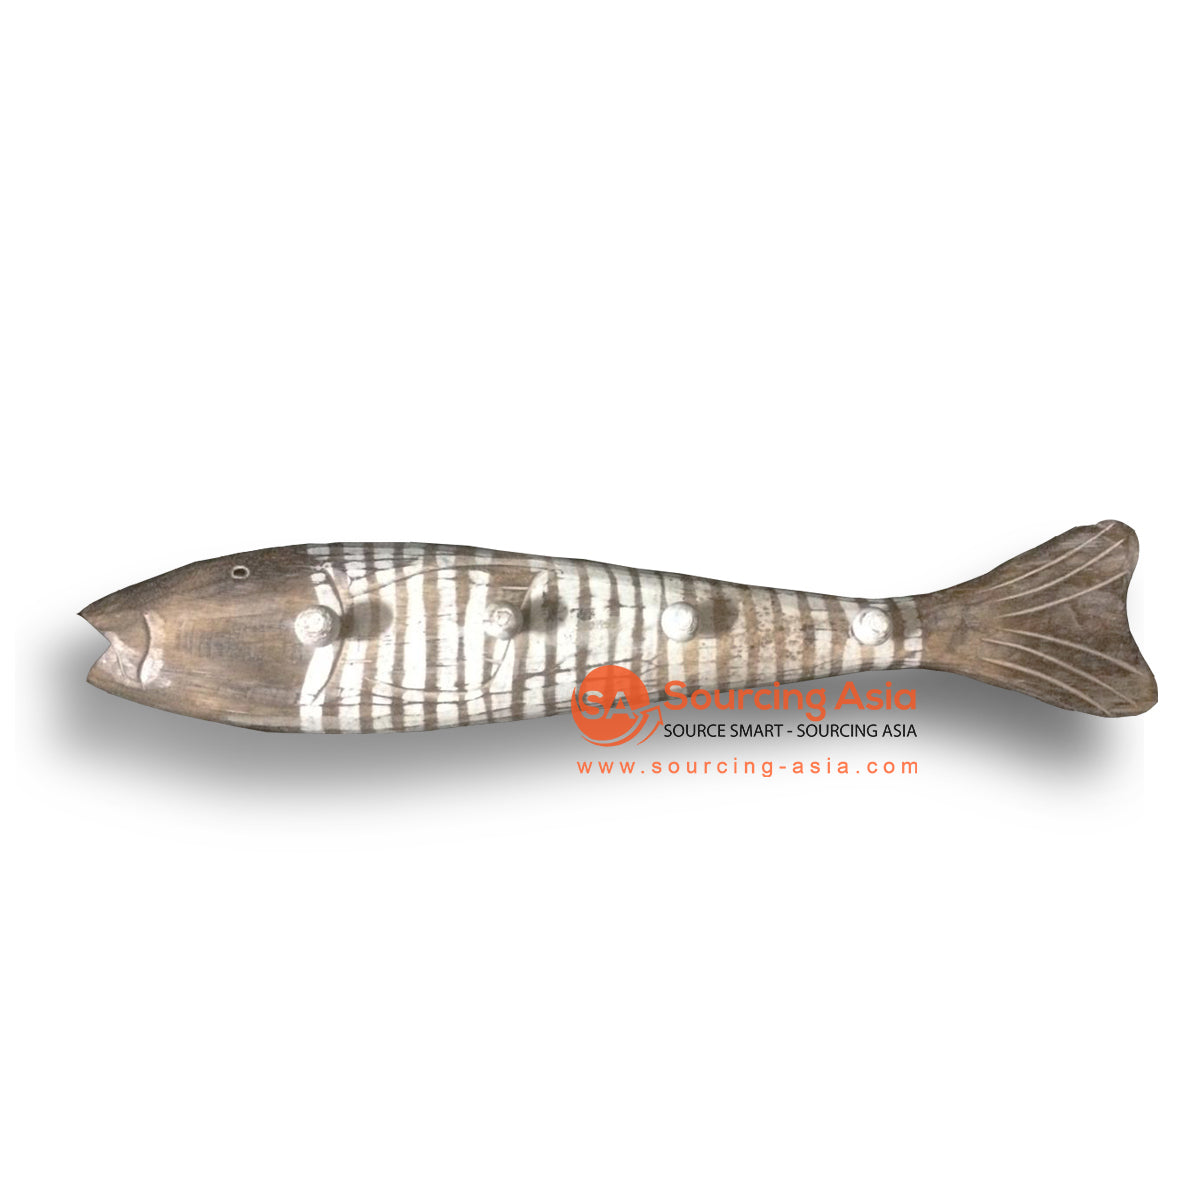 MTIB020-1 NATURAL AND WHITE WOODEN FISH HANGER